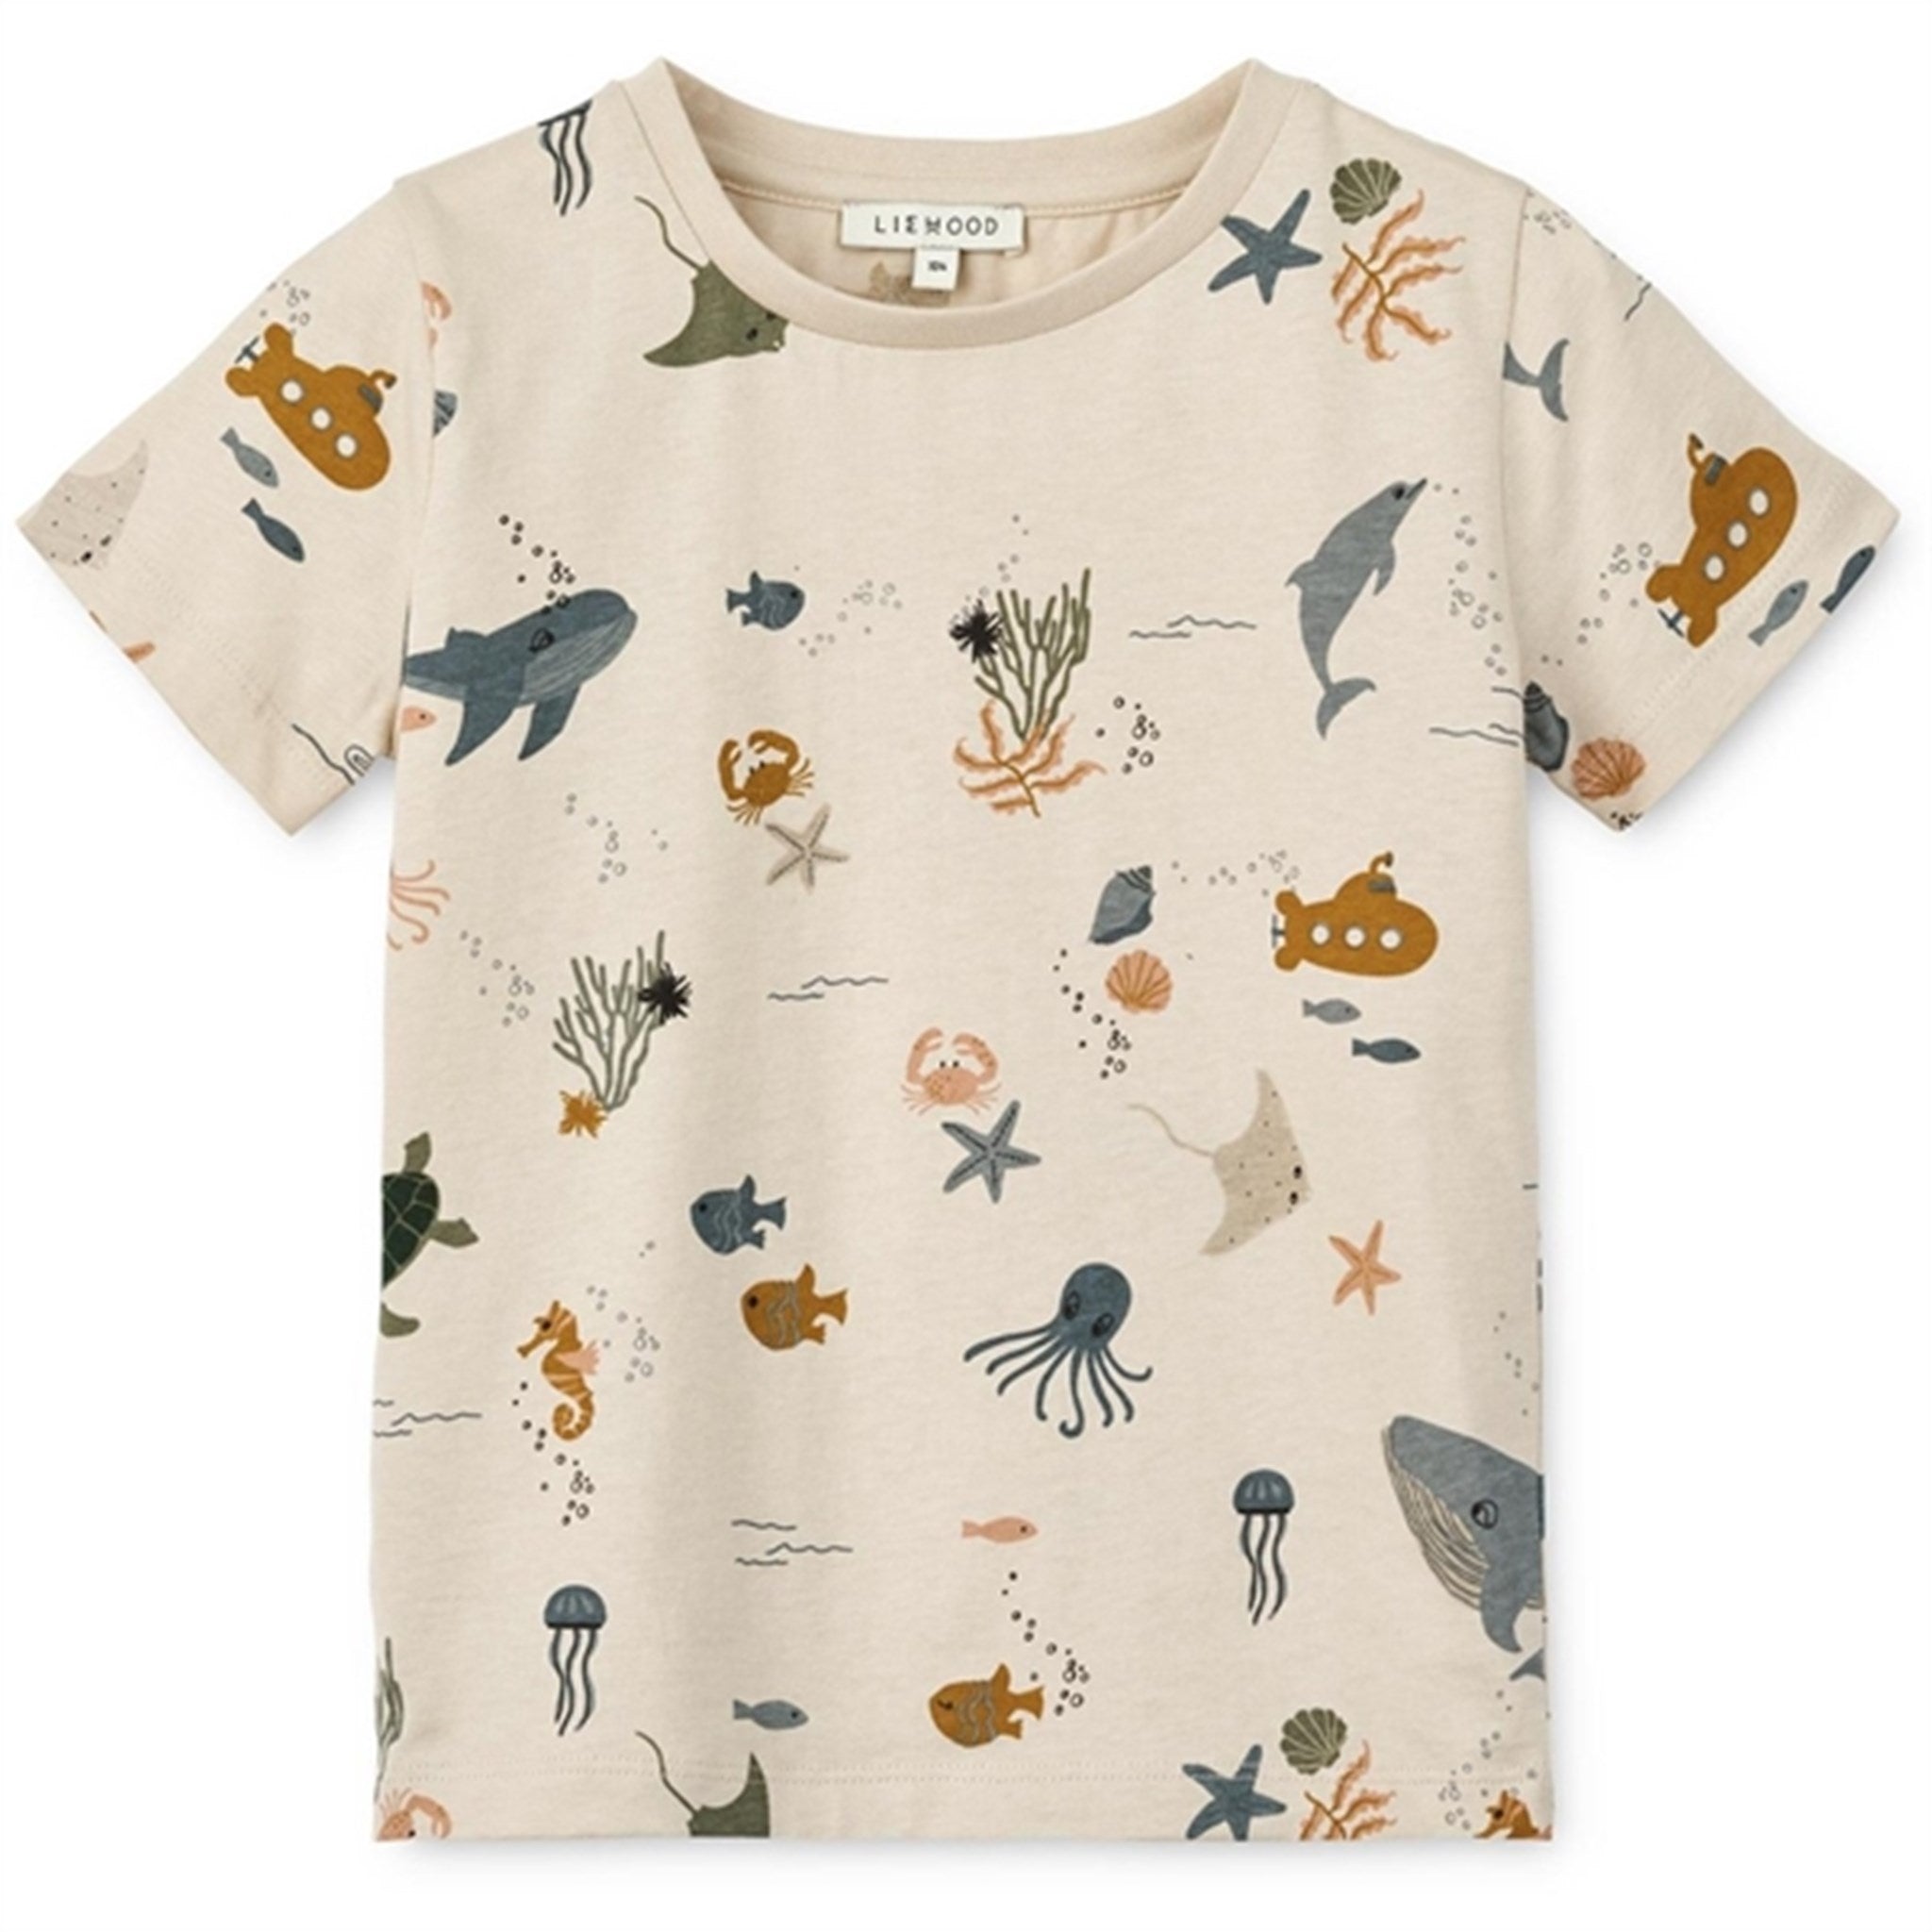 Liewood Sea Creature/Sandy Apia Printed T-shirt